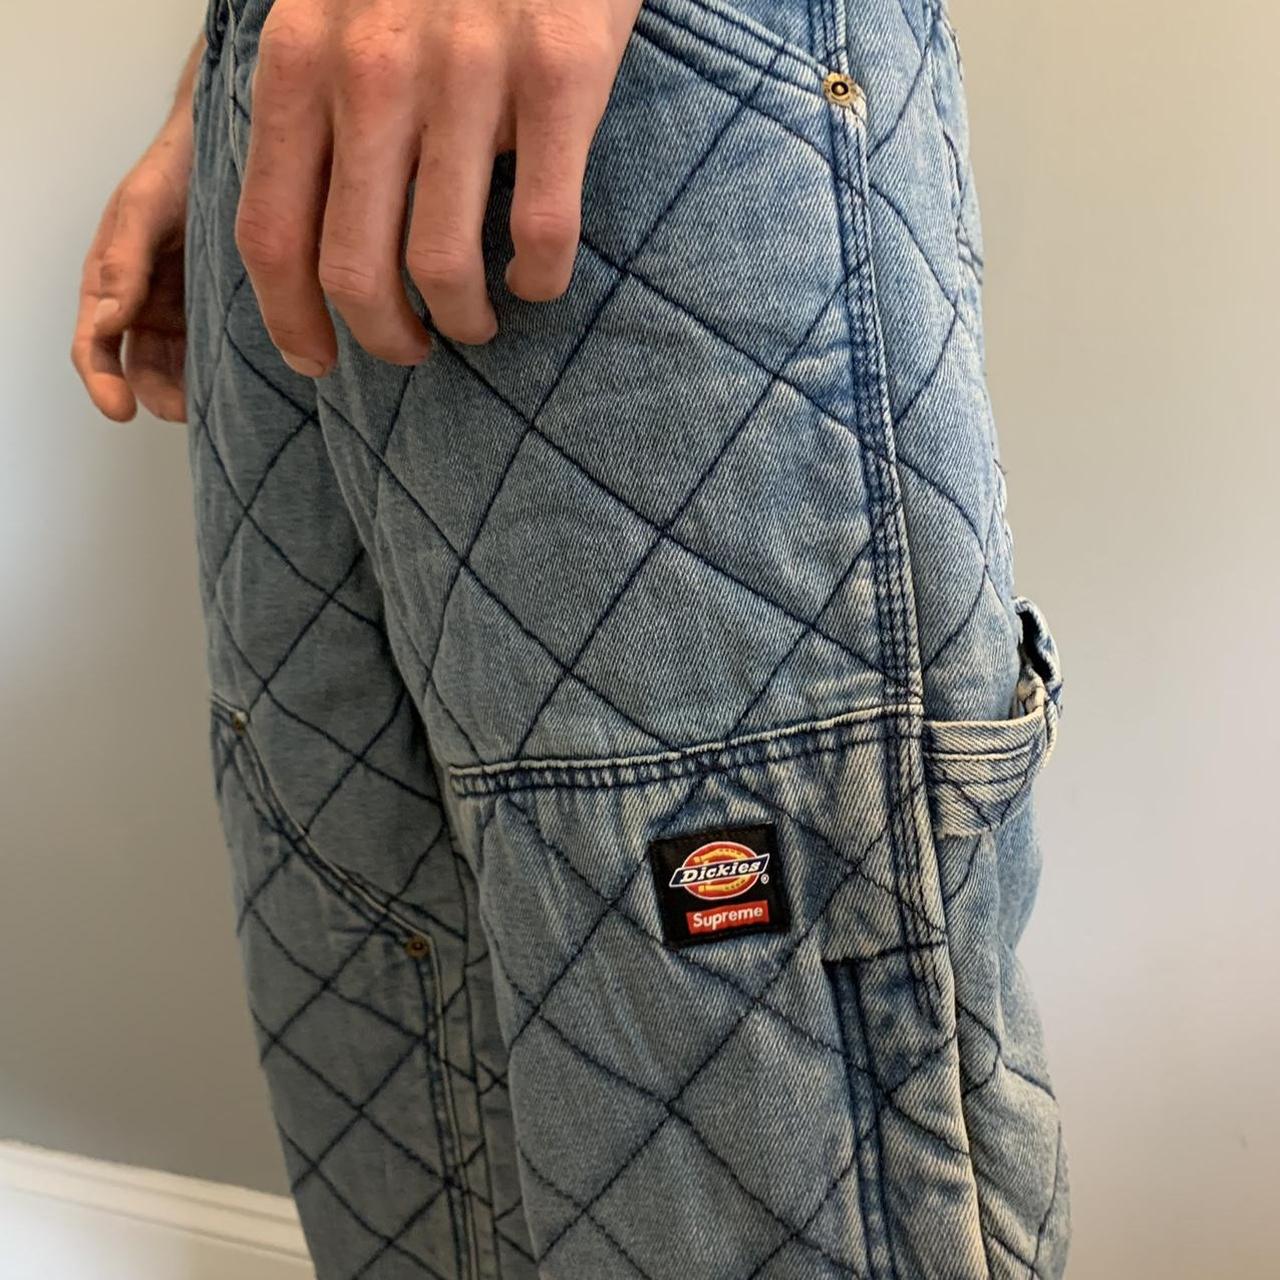 dickies supreme quilted double knee painter pants - Depop